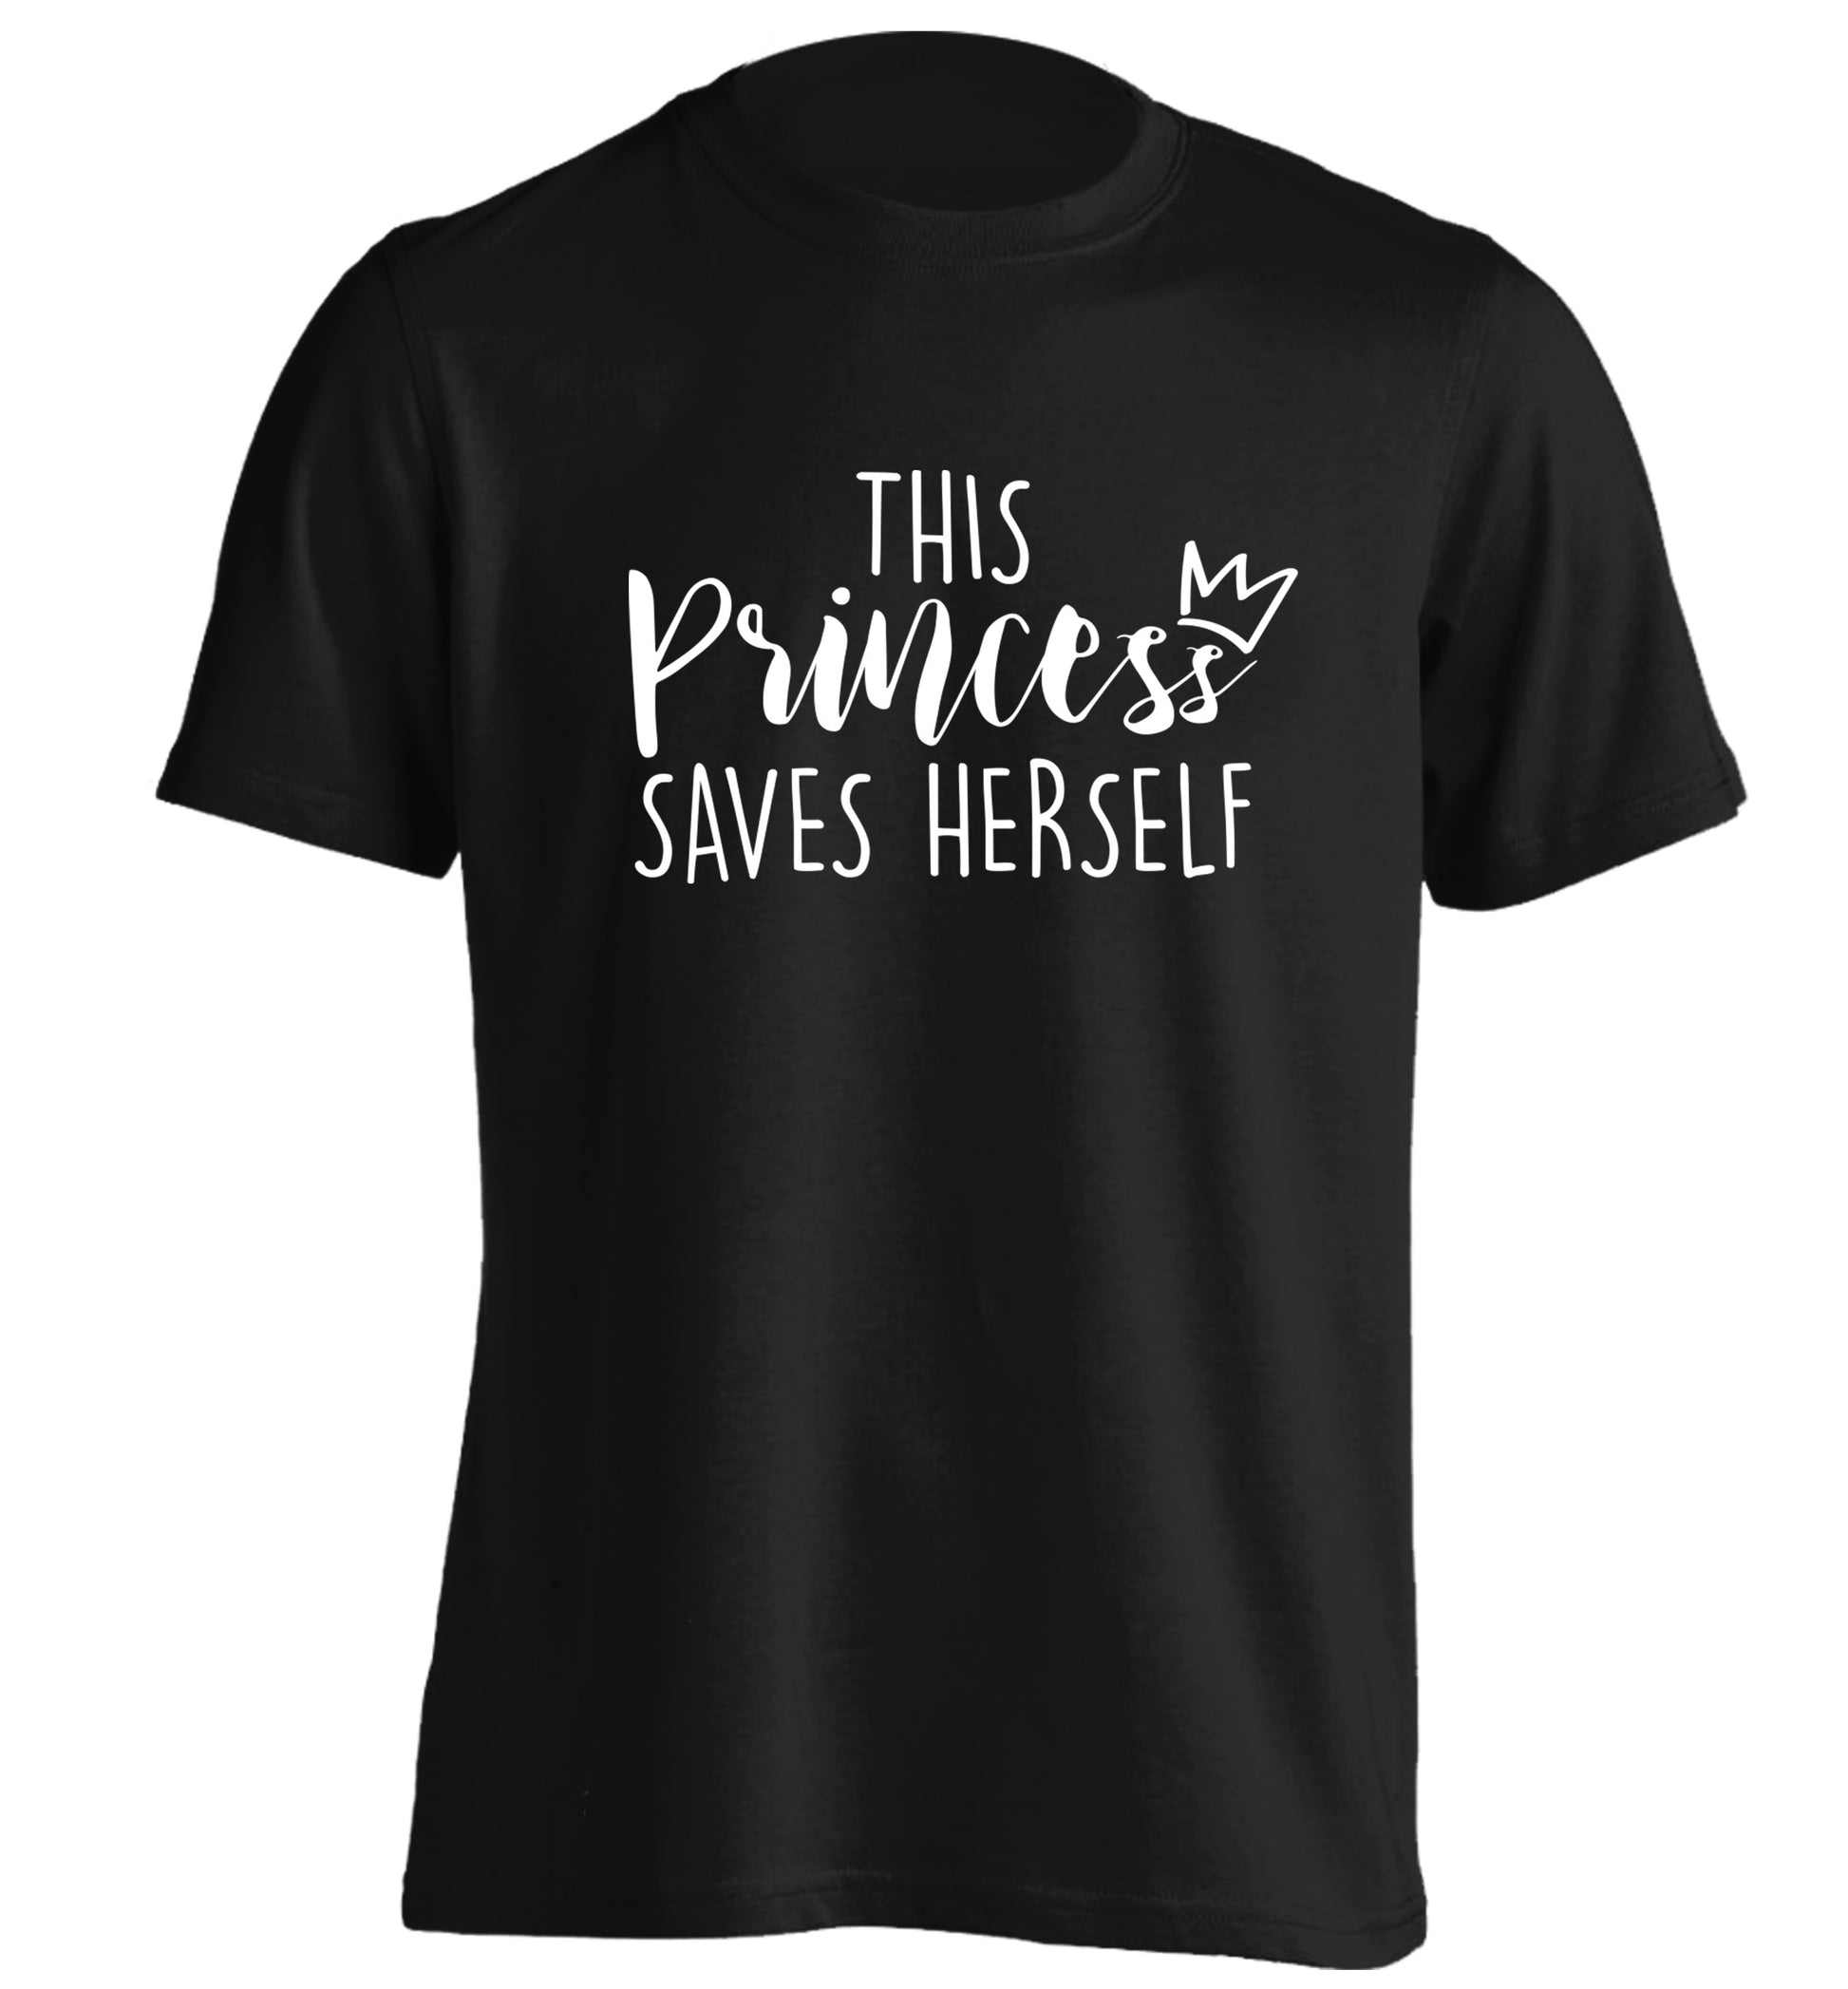 This princess saves herself adults unisex black Tshirt 2XL